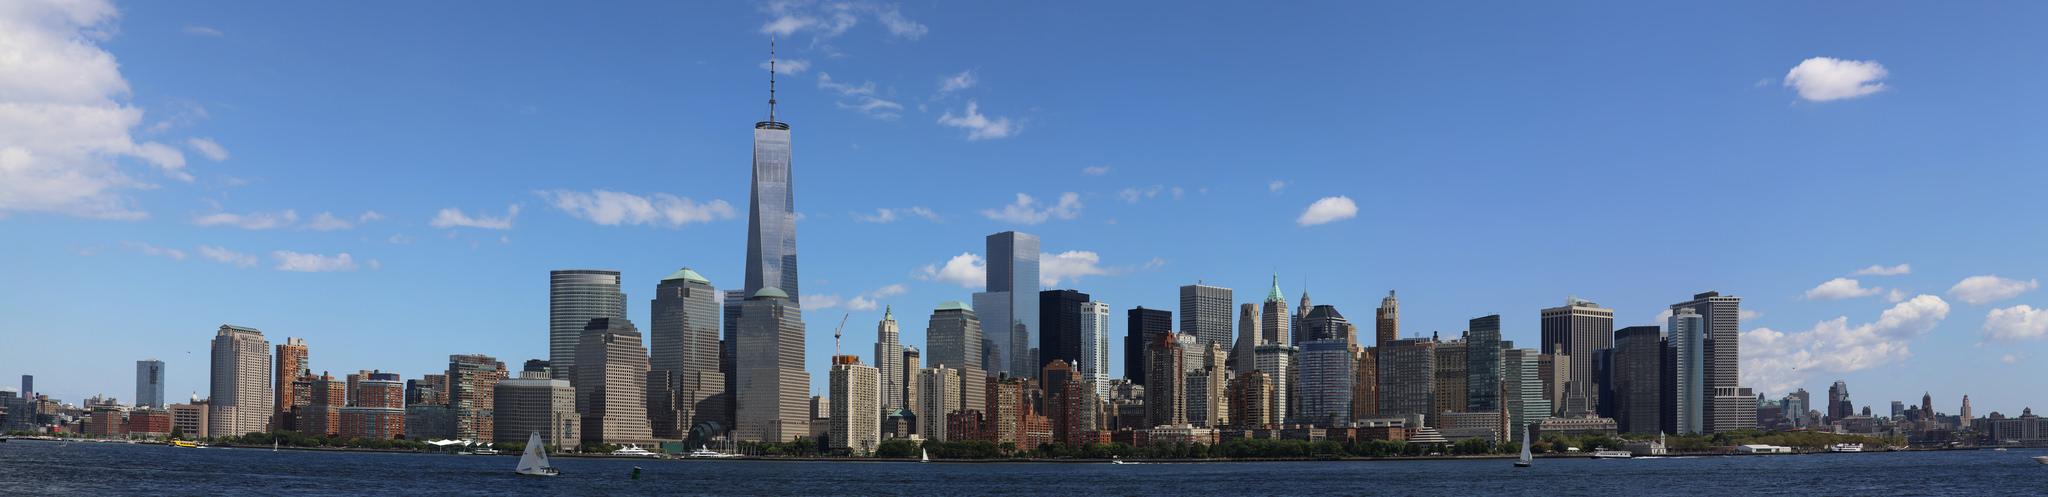 Nouvelle skyline de New York